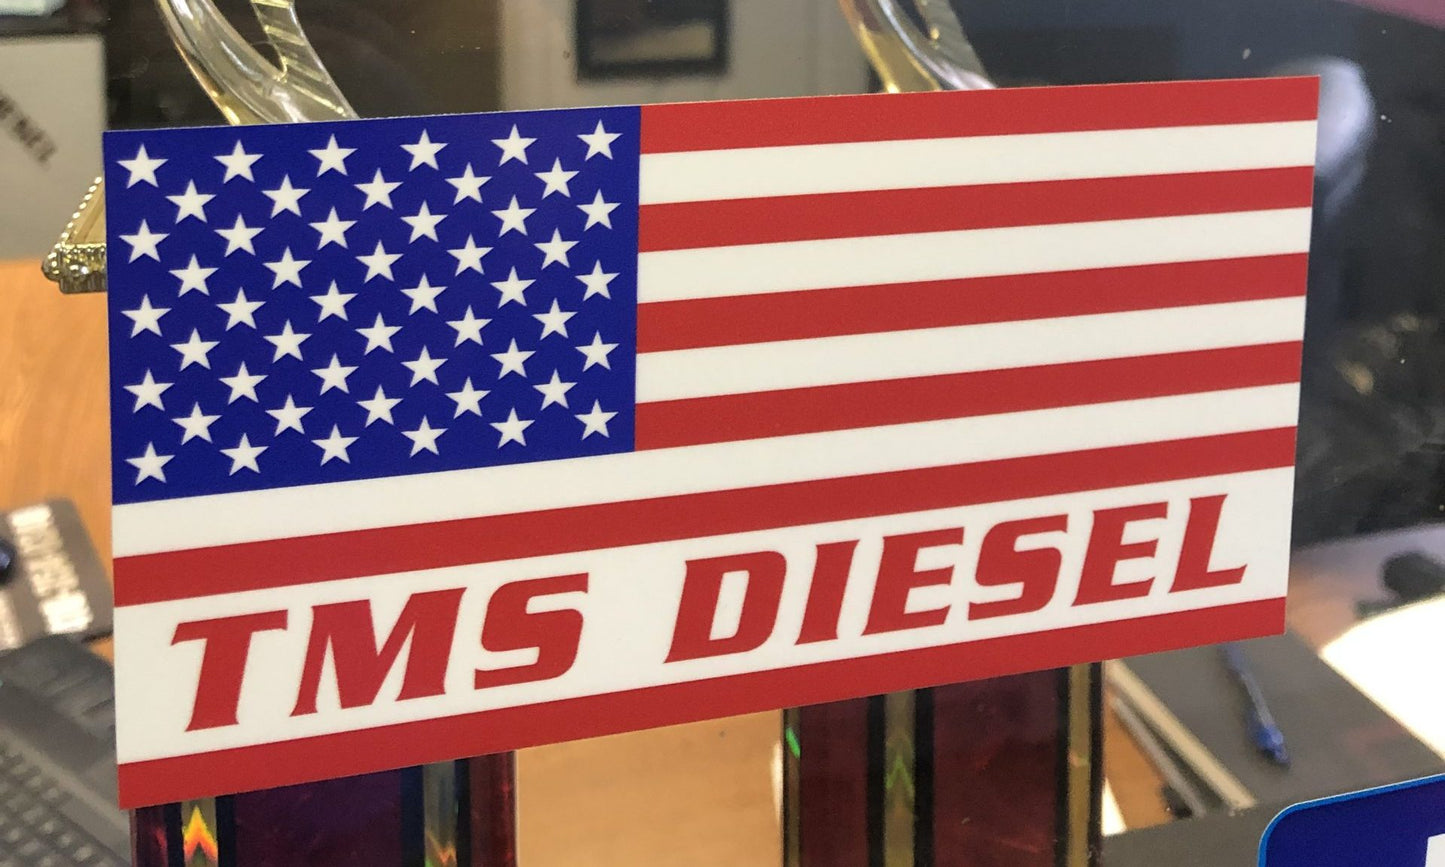 American Flag Sticker